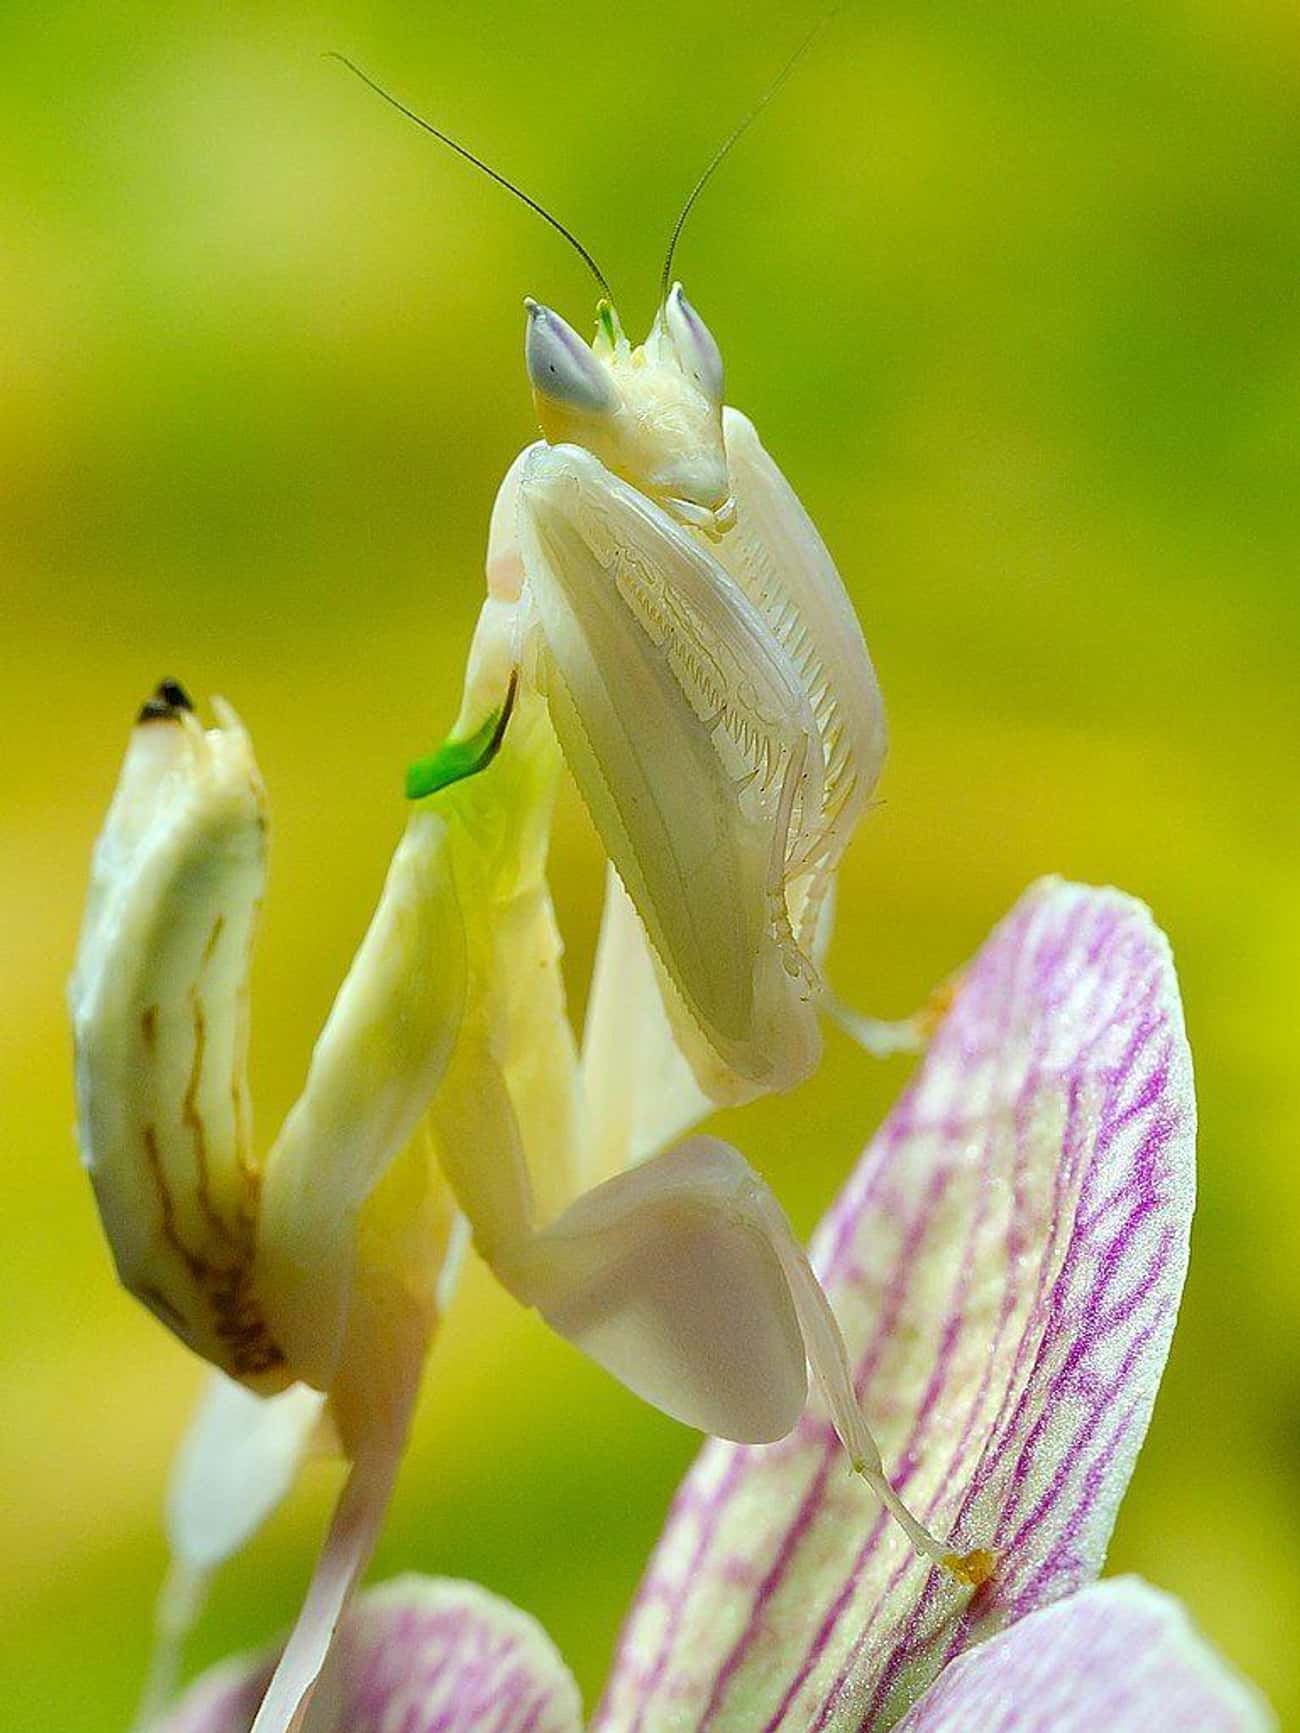 The Common Flower Mantis